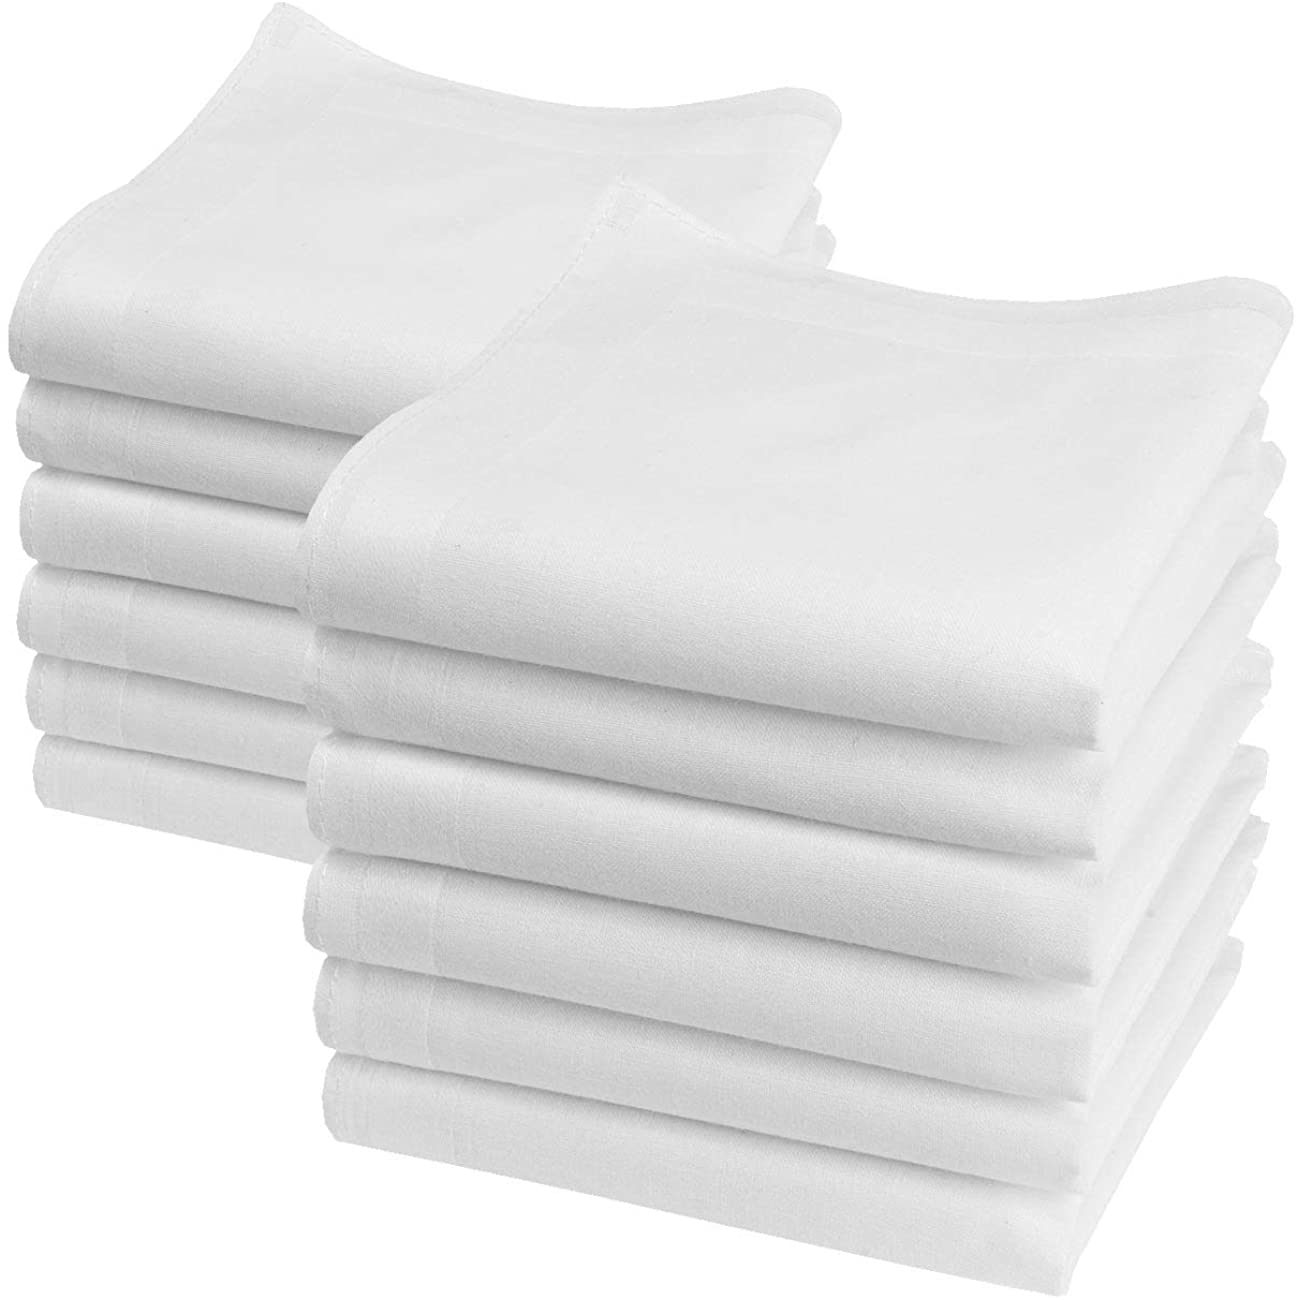 Merrysquare - Little Handkerchiefs - LILLIPUT Model - Size 9 inches square - 100% Cotton